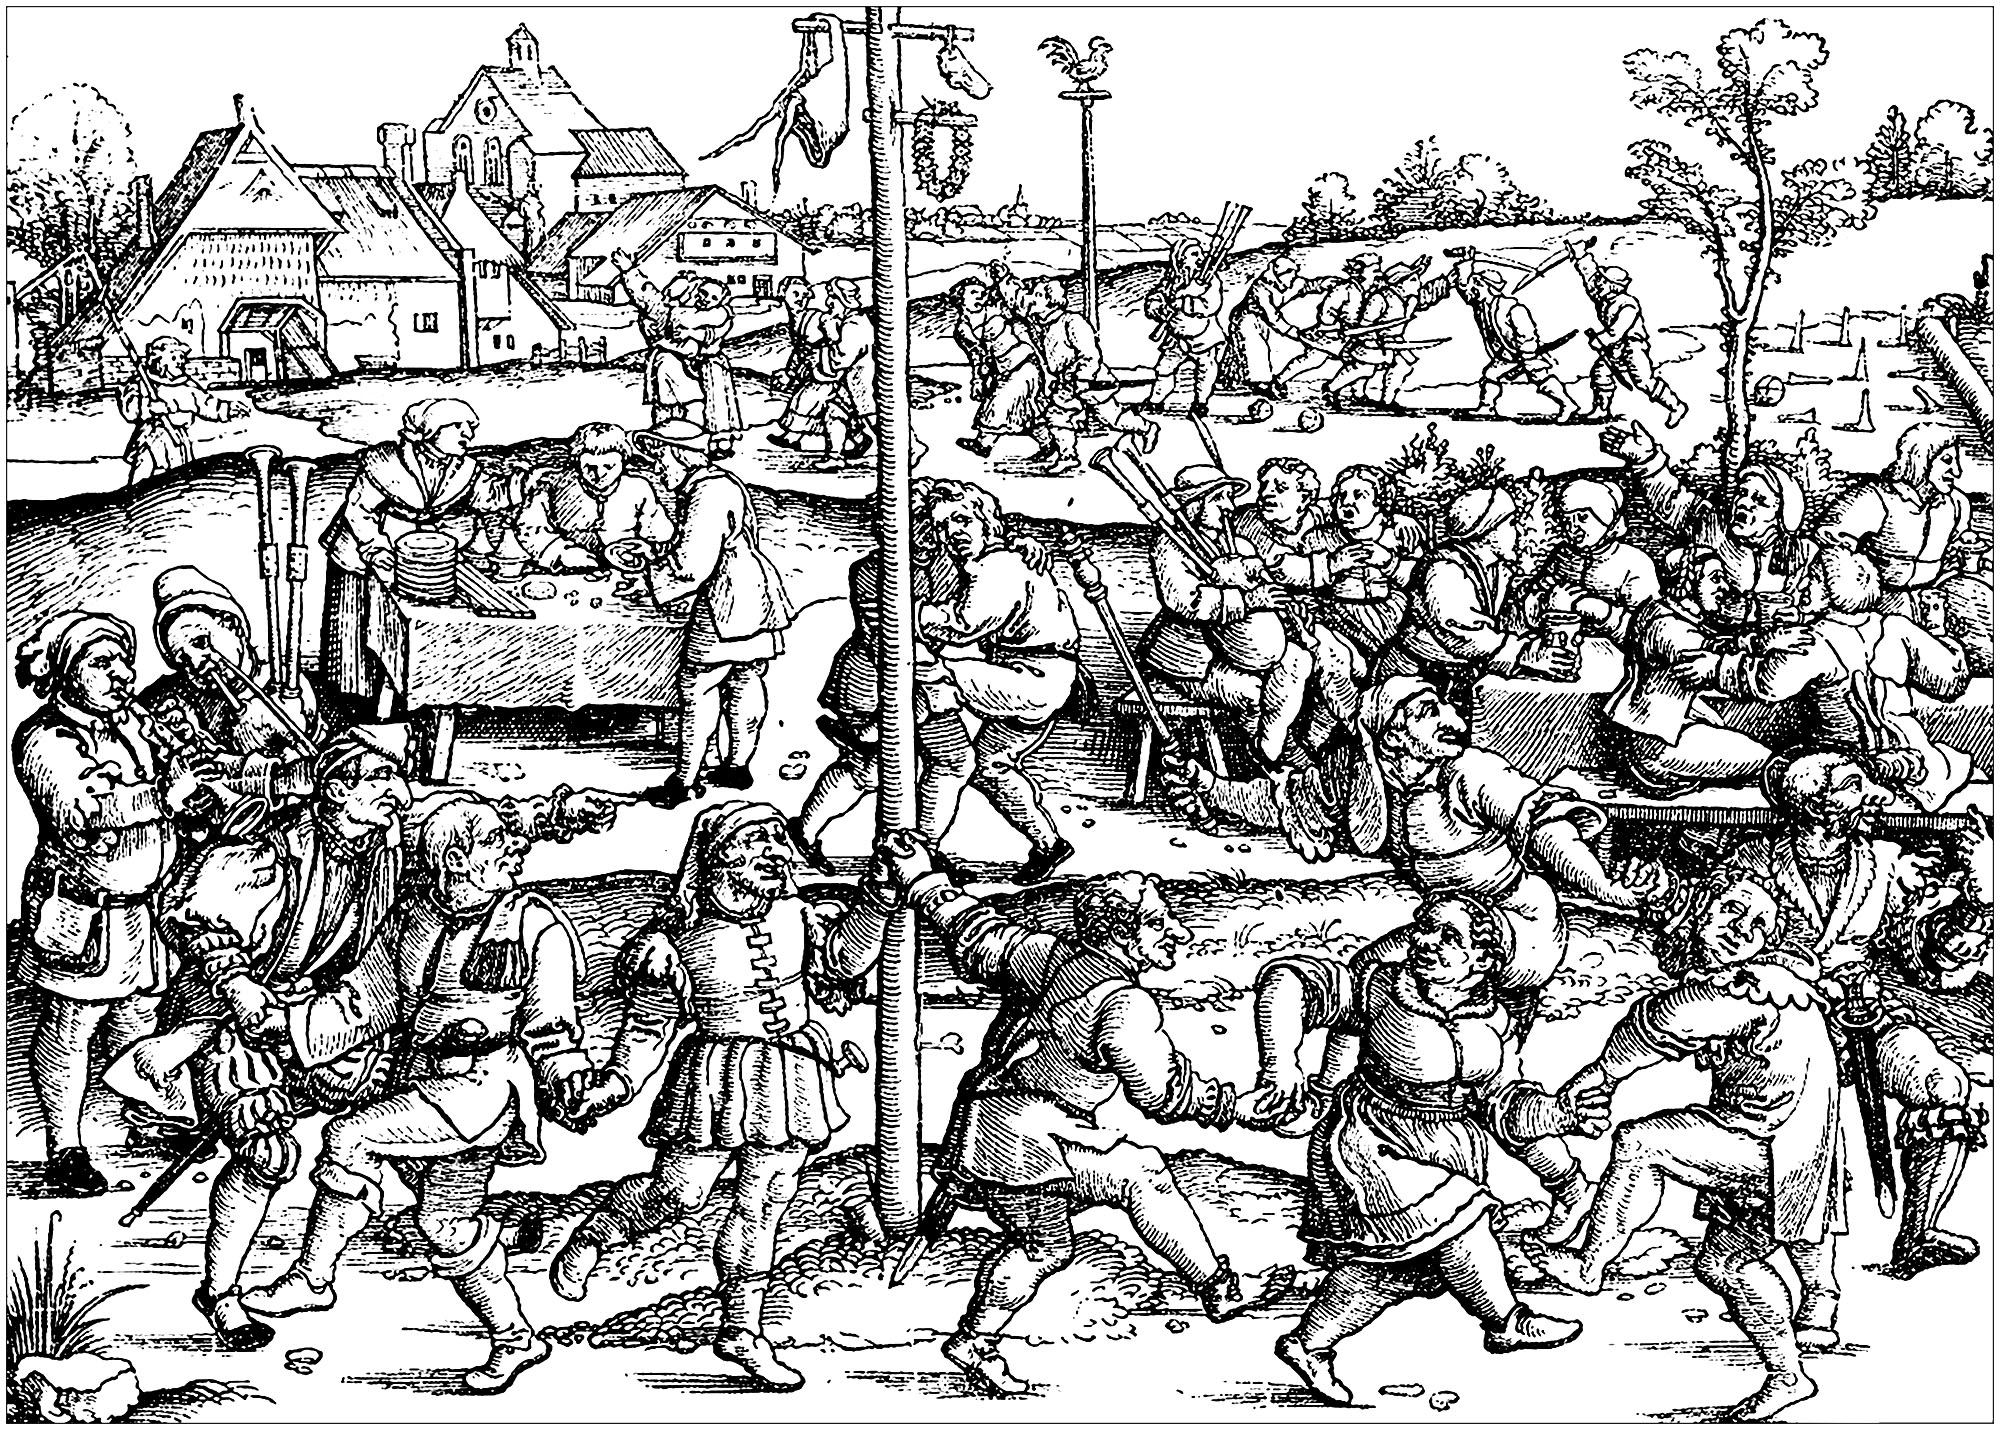 Middle ages peasants celebrating (from a vintage illustration)